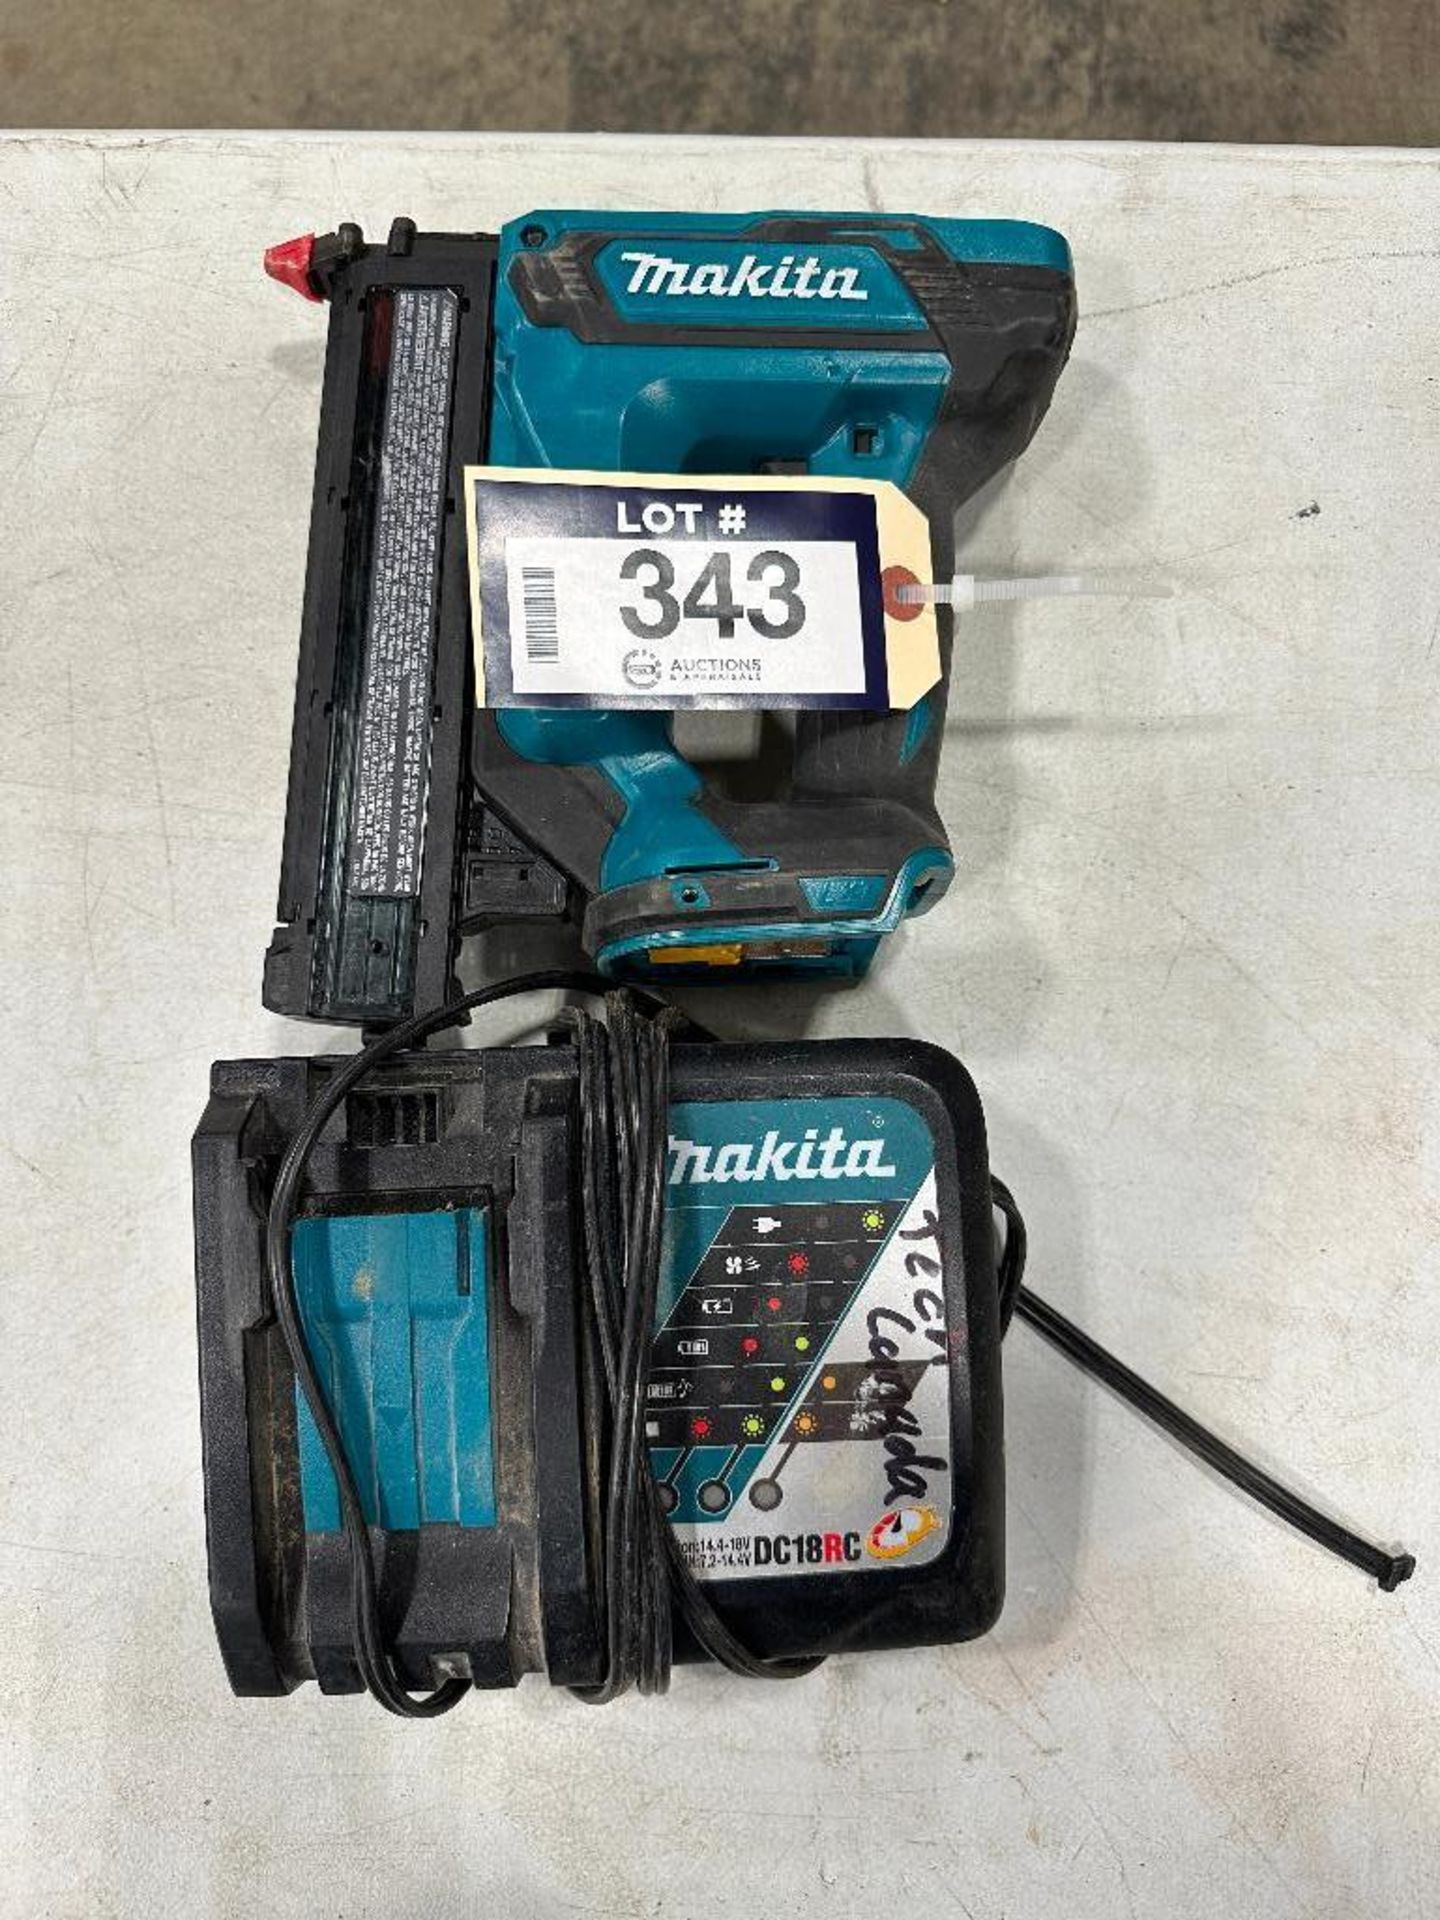 Makita DFN350 Cordless Stapler with Makita Battery Charger (Broken Cord) - Image 2 of 6